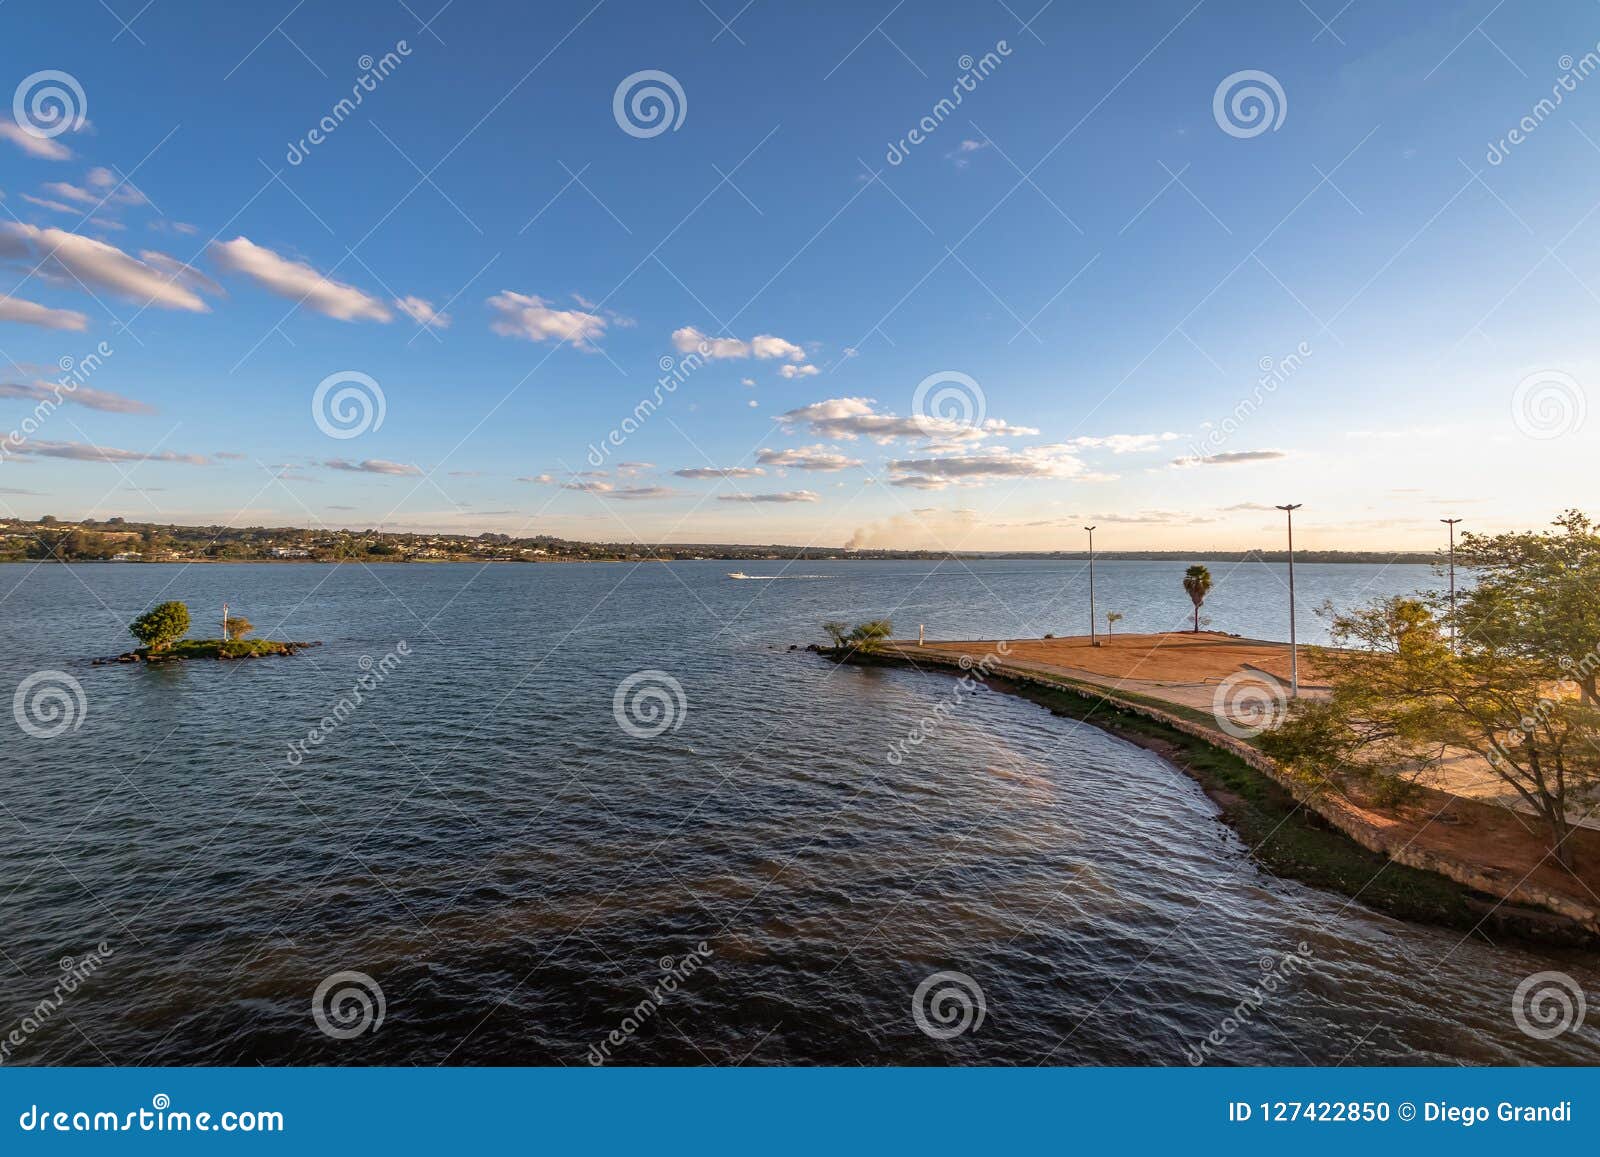 paranoa lake - brasilia, distrito federal, brazil